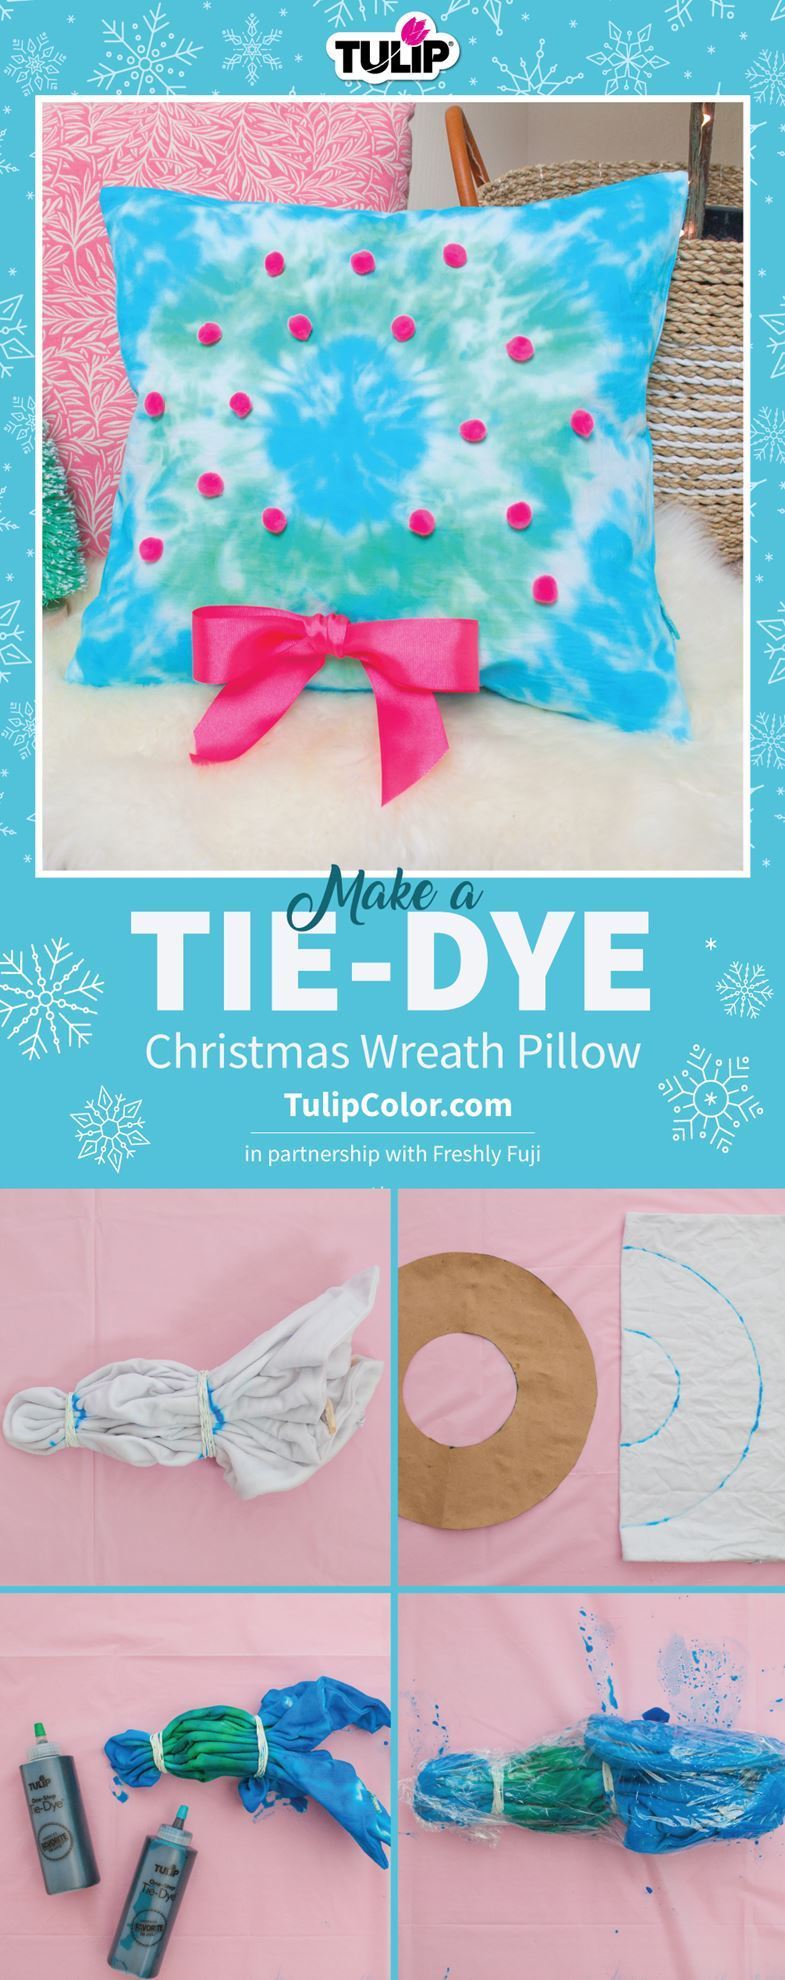 Tie-Dye Christmas Wreath Pillow